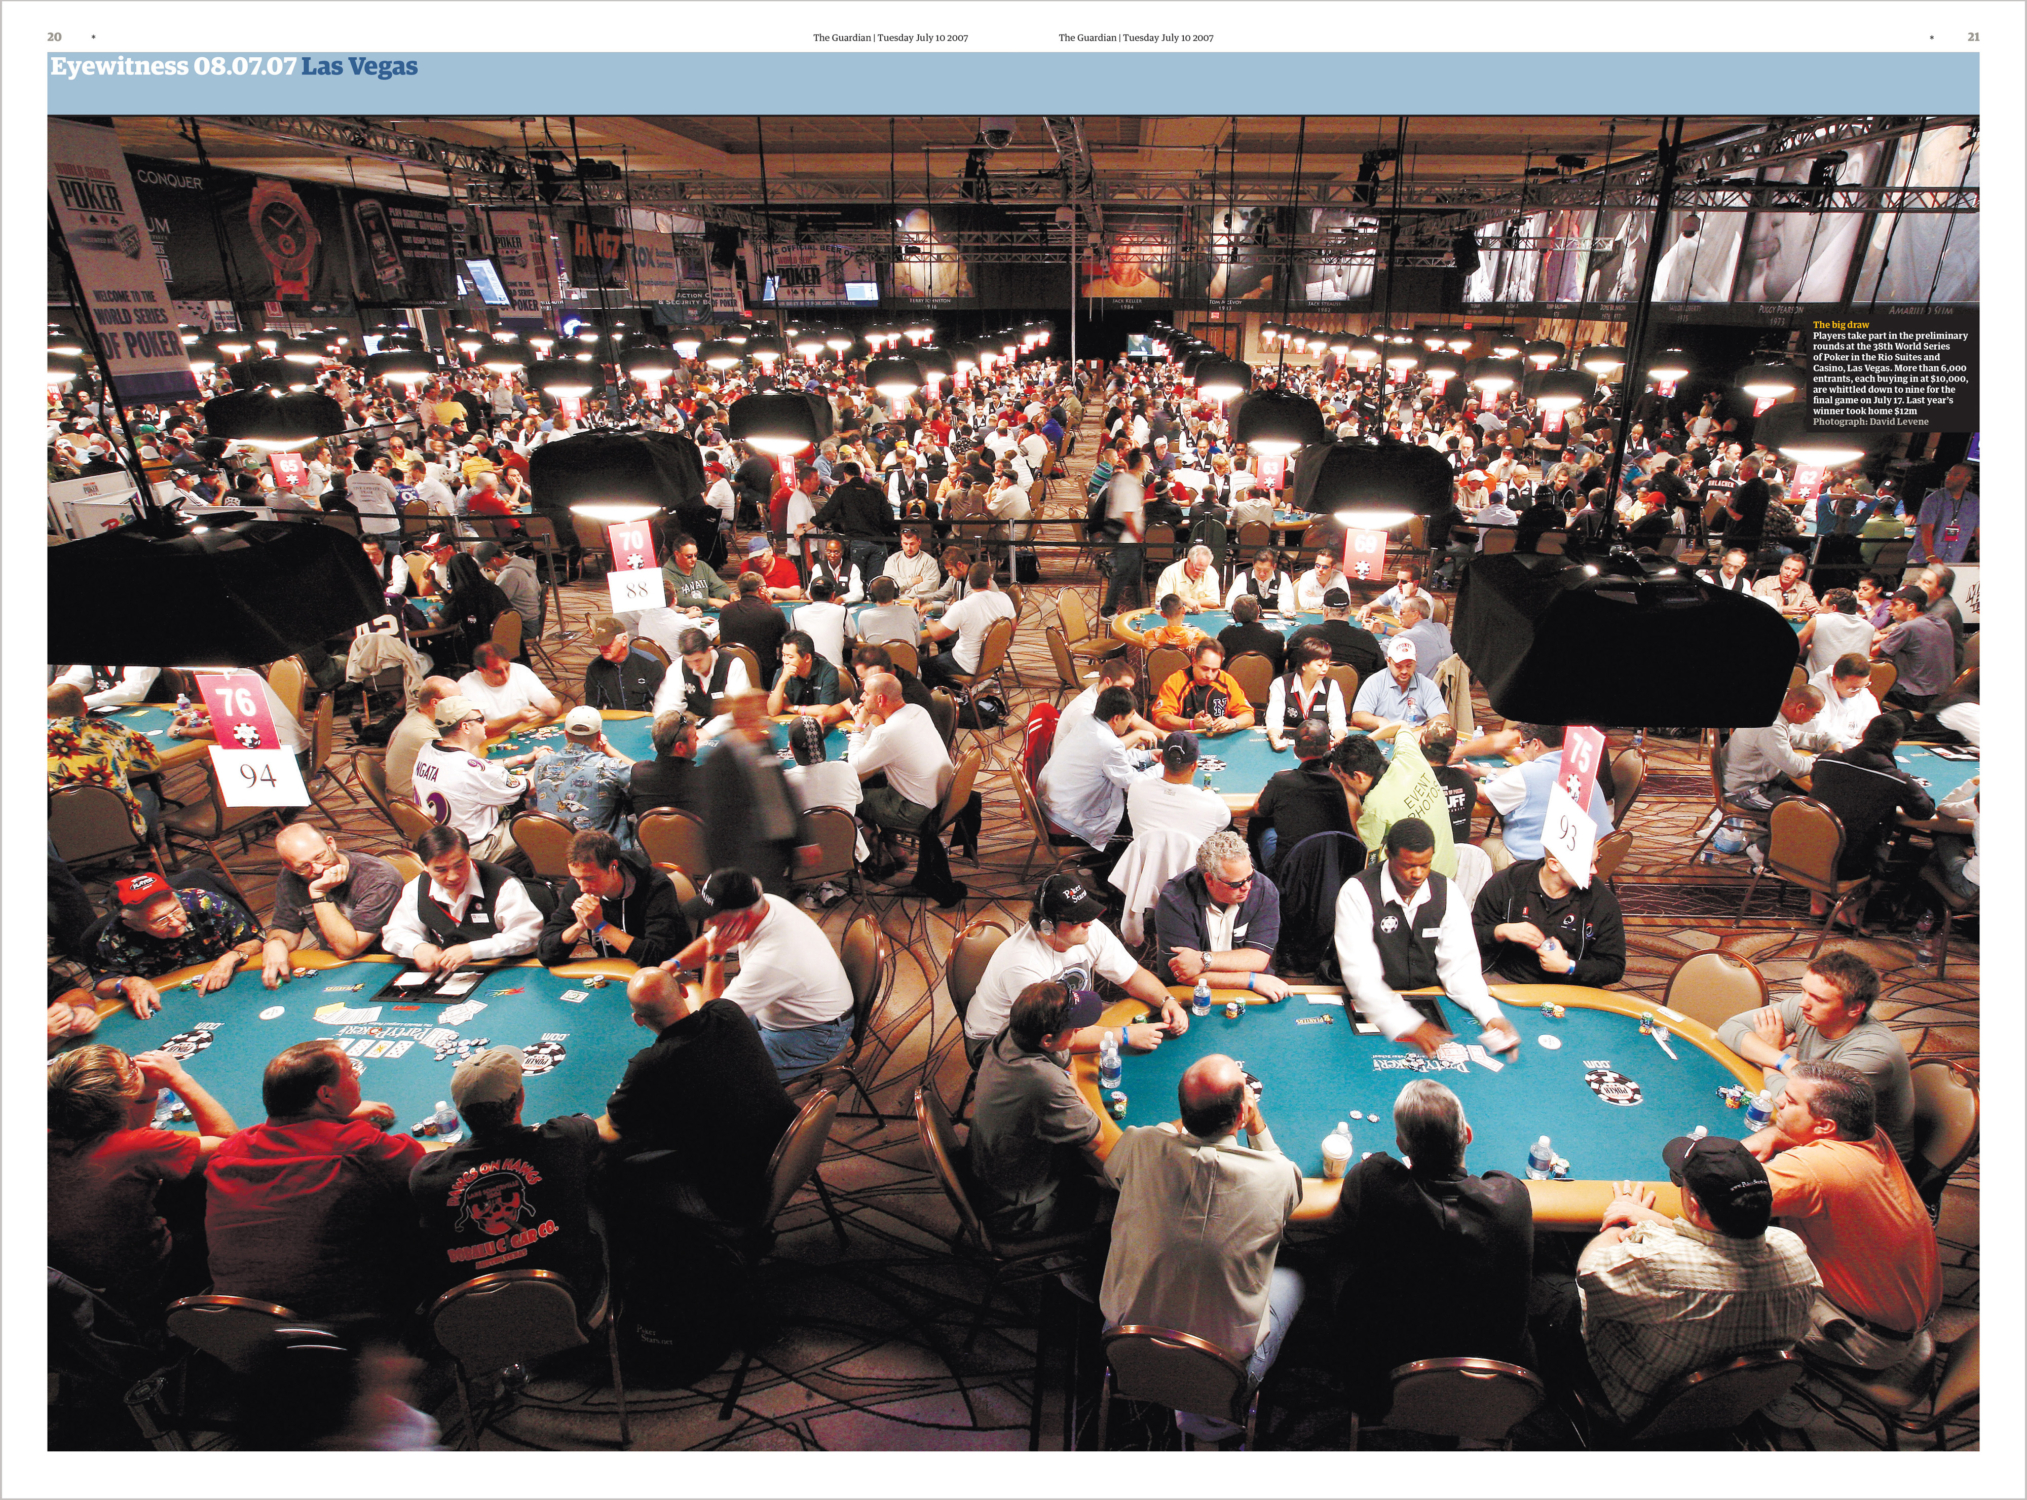 38th World Series of Poker, Las Vegas, David Levene Photography